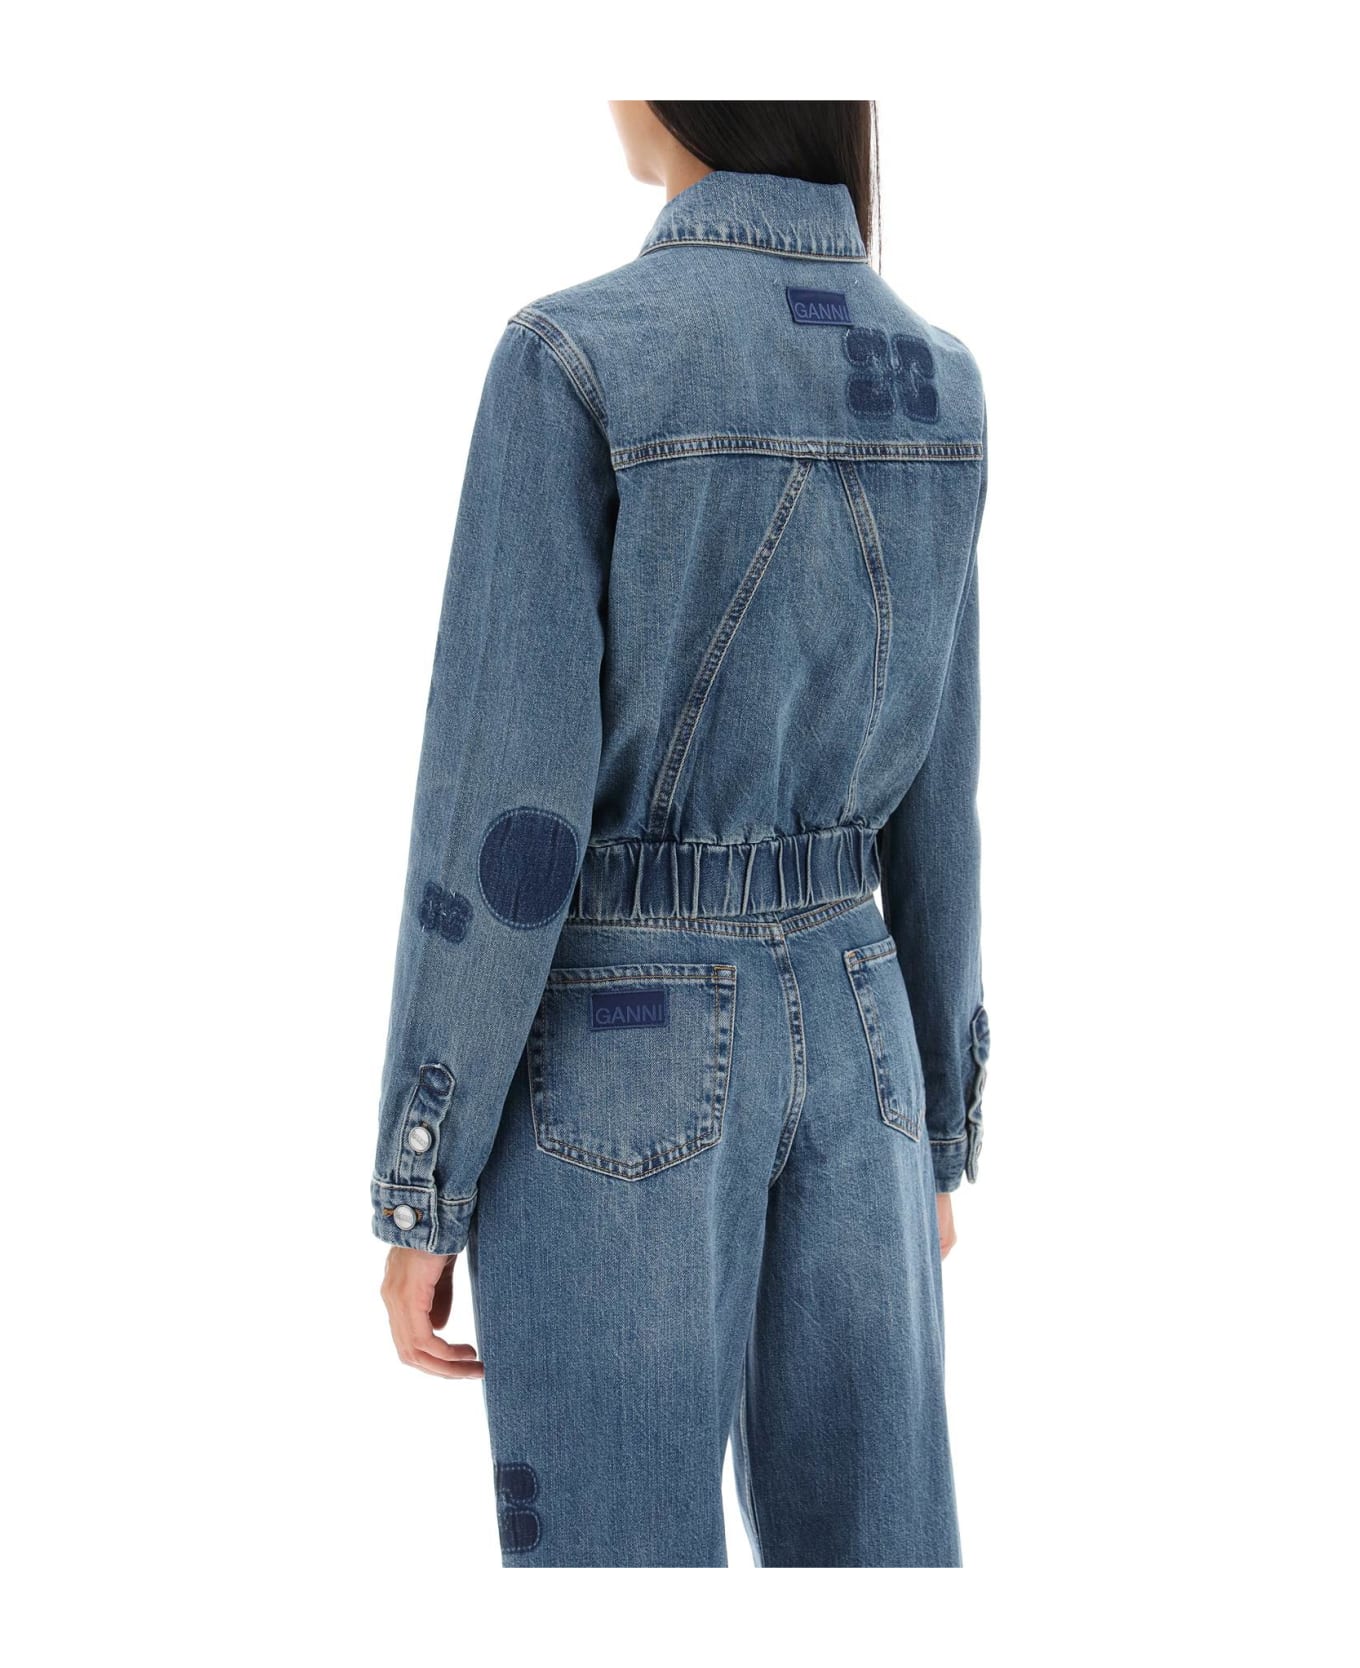 Ganni Blue Organic Cotton Bomber Jacket - TINT WASH (Light blue) ジャケット